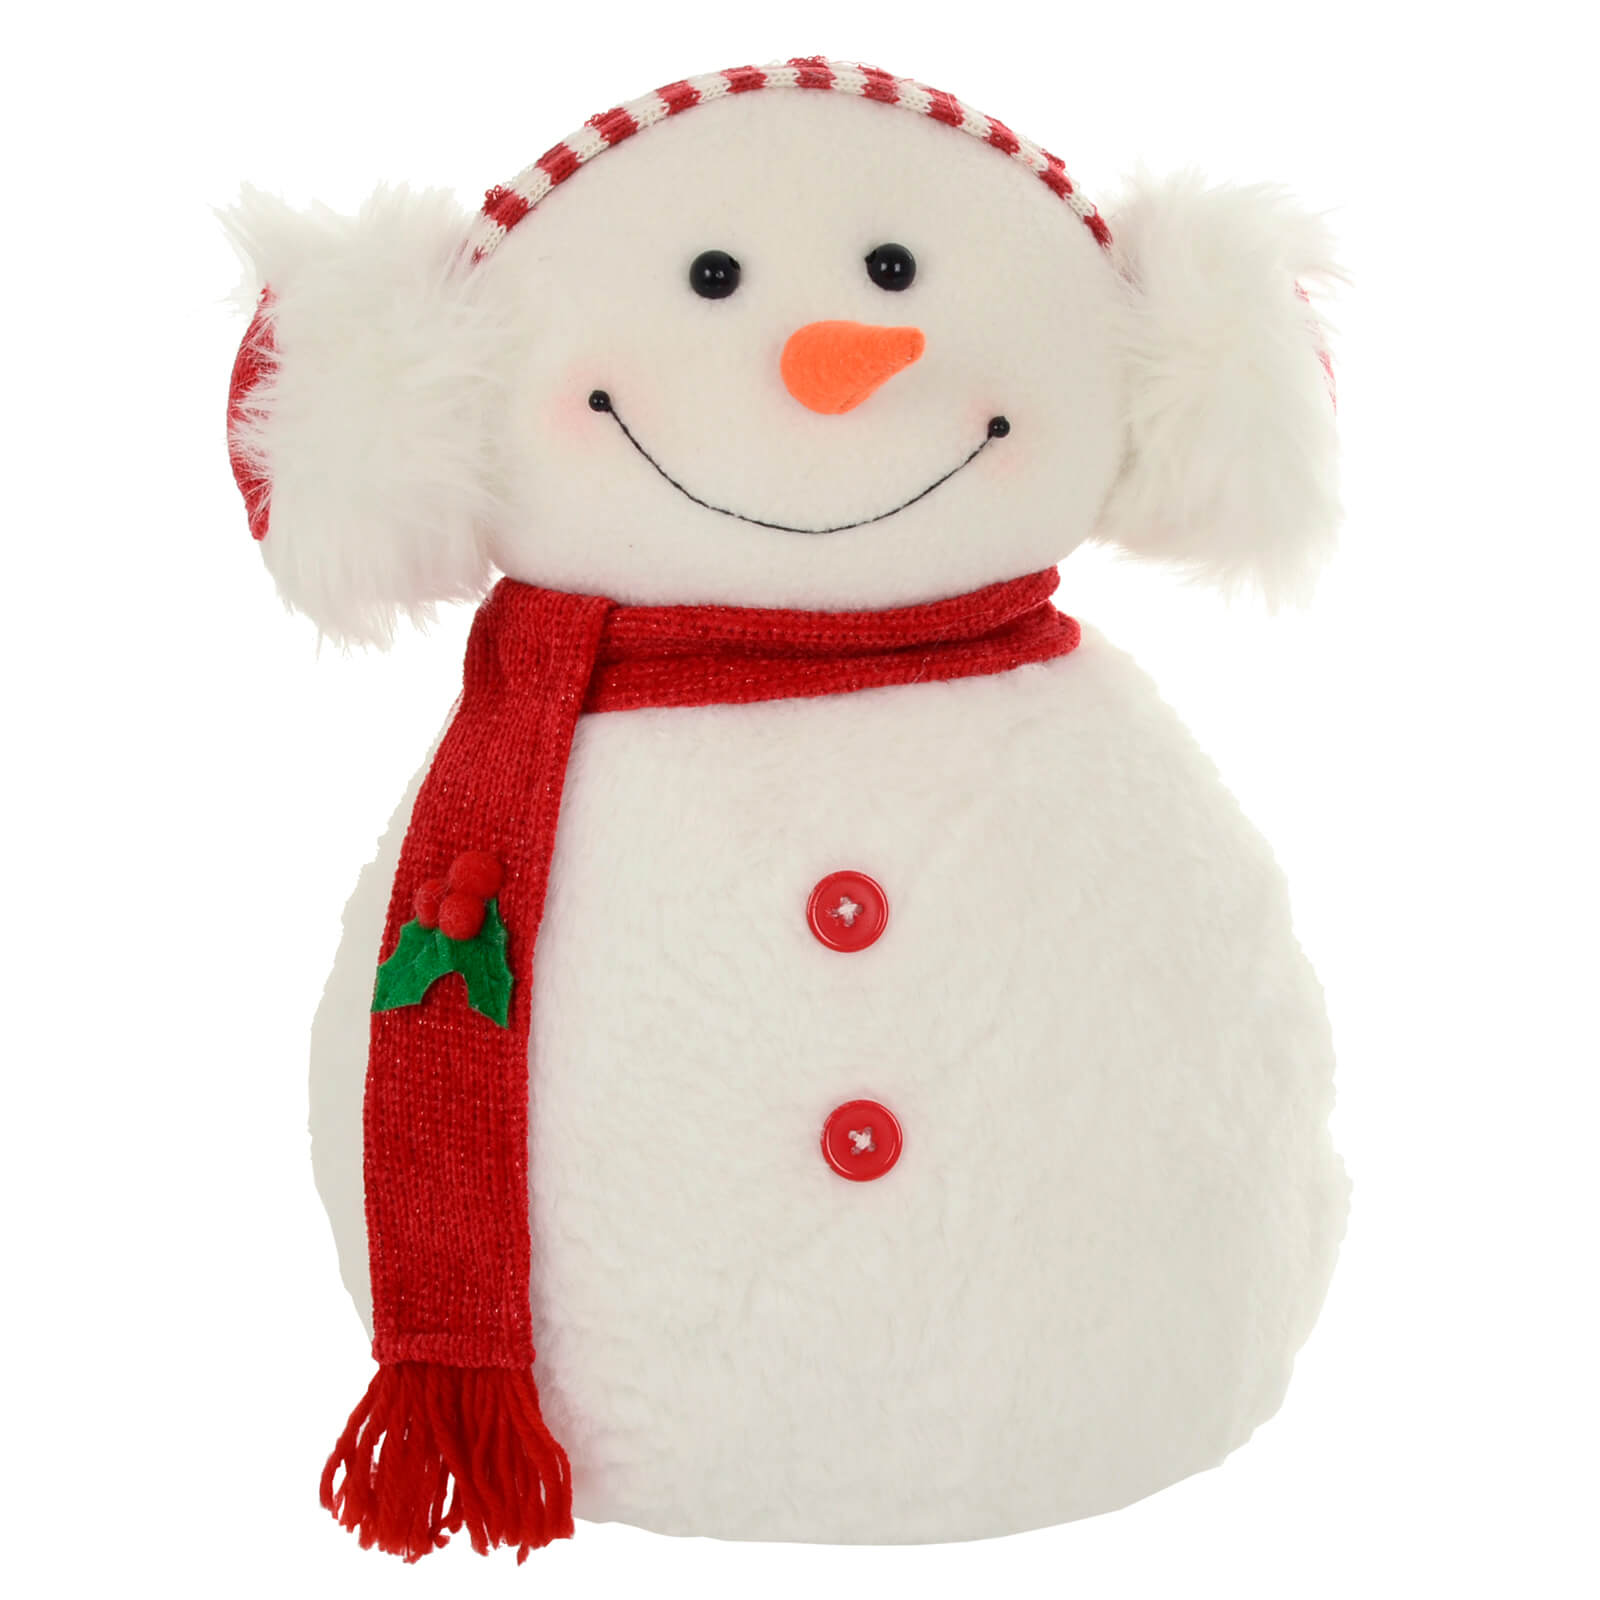 35cm snowman decoration with earmuffs